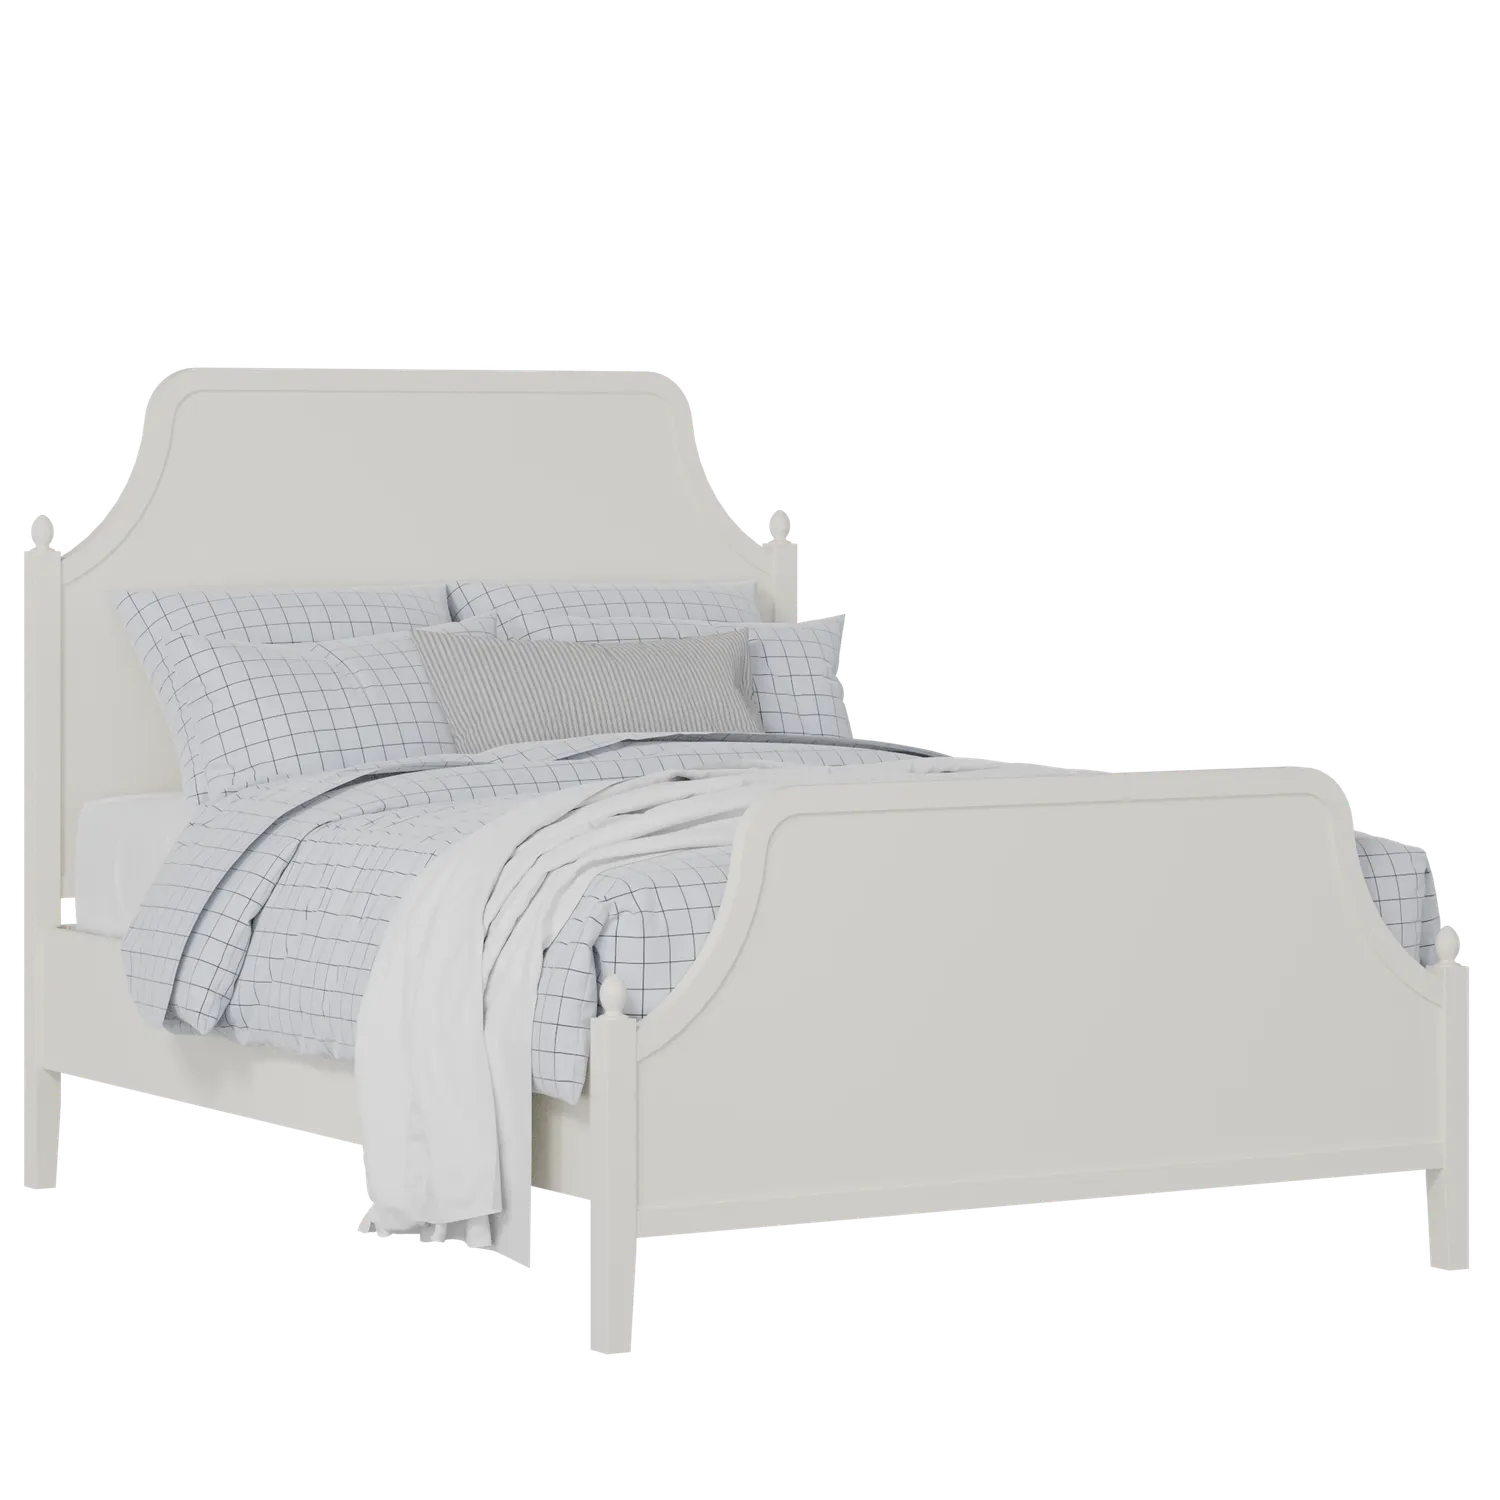 Ruskin lit en bois peint en blanc avec matelas